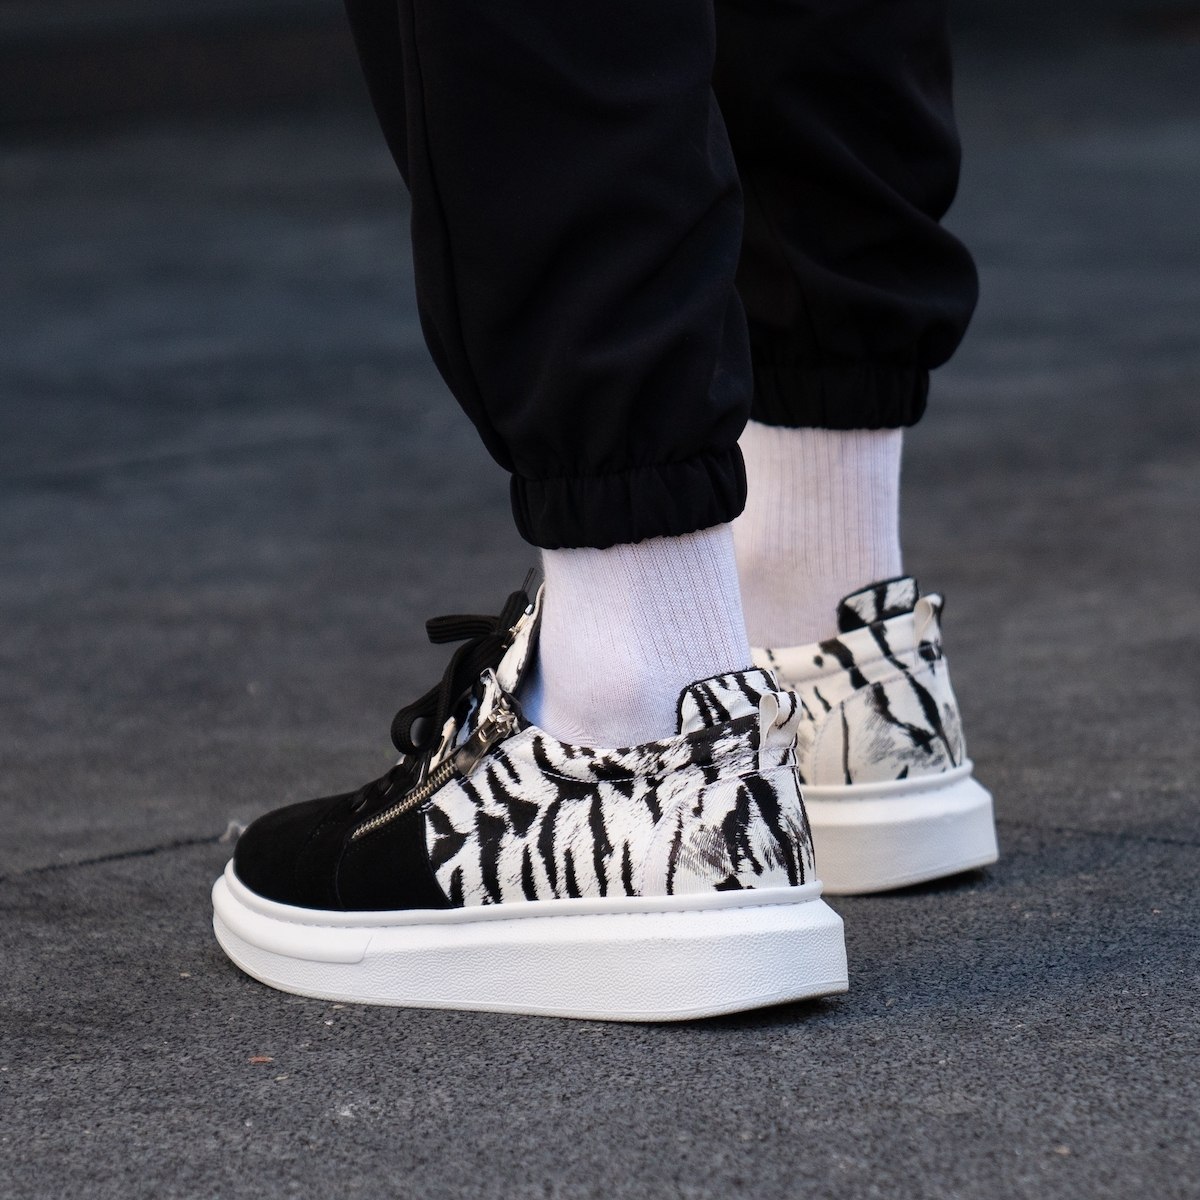 Hype Sole Zipped Style Sneakers in Black Suede Zebra Design | Martin Valen